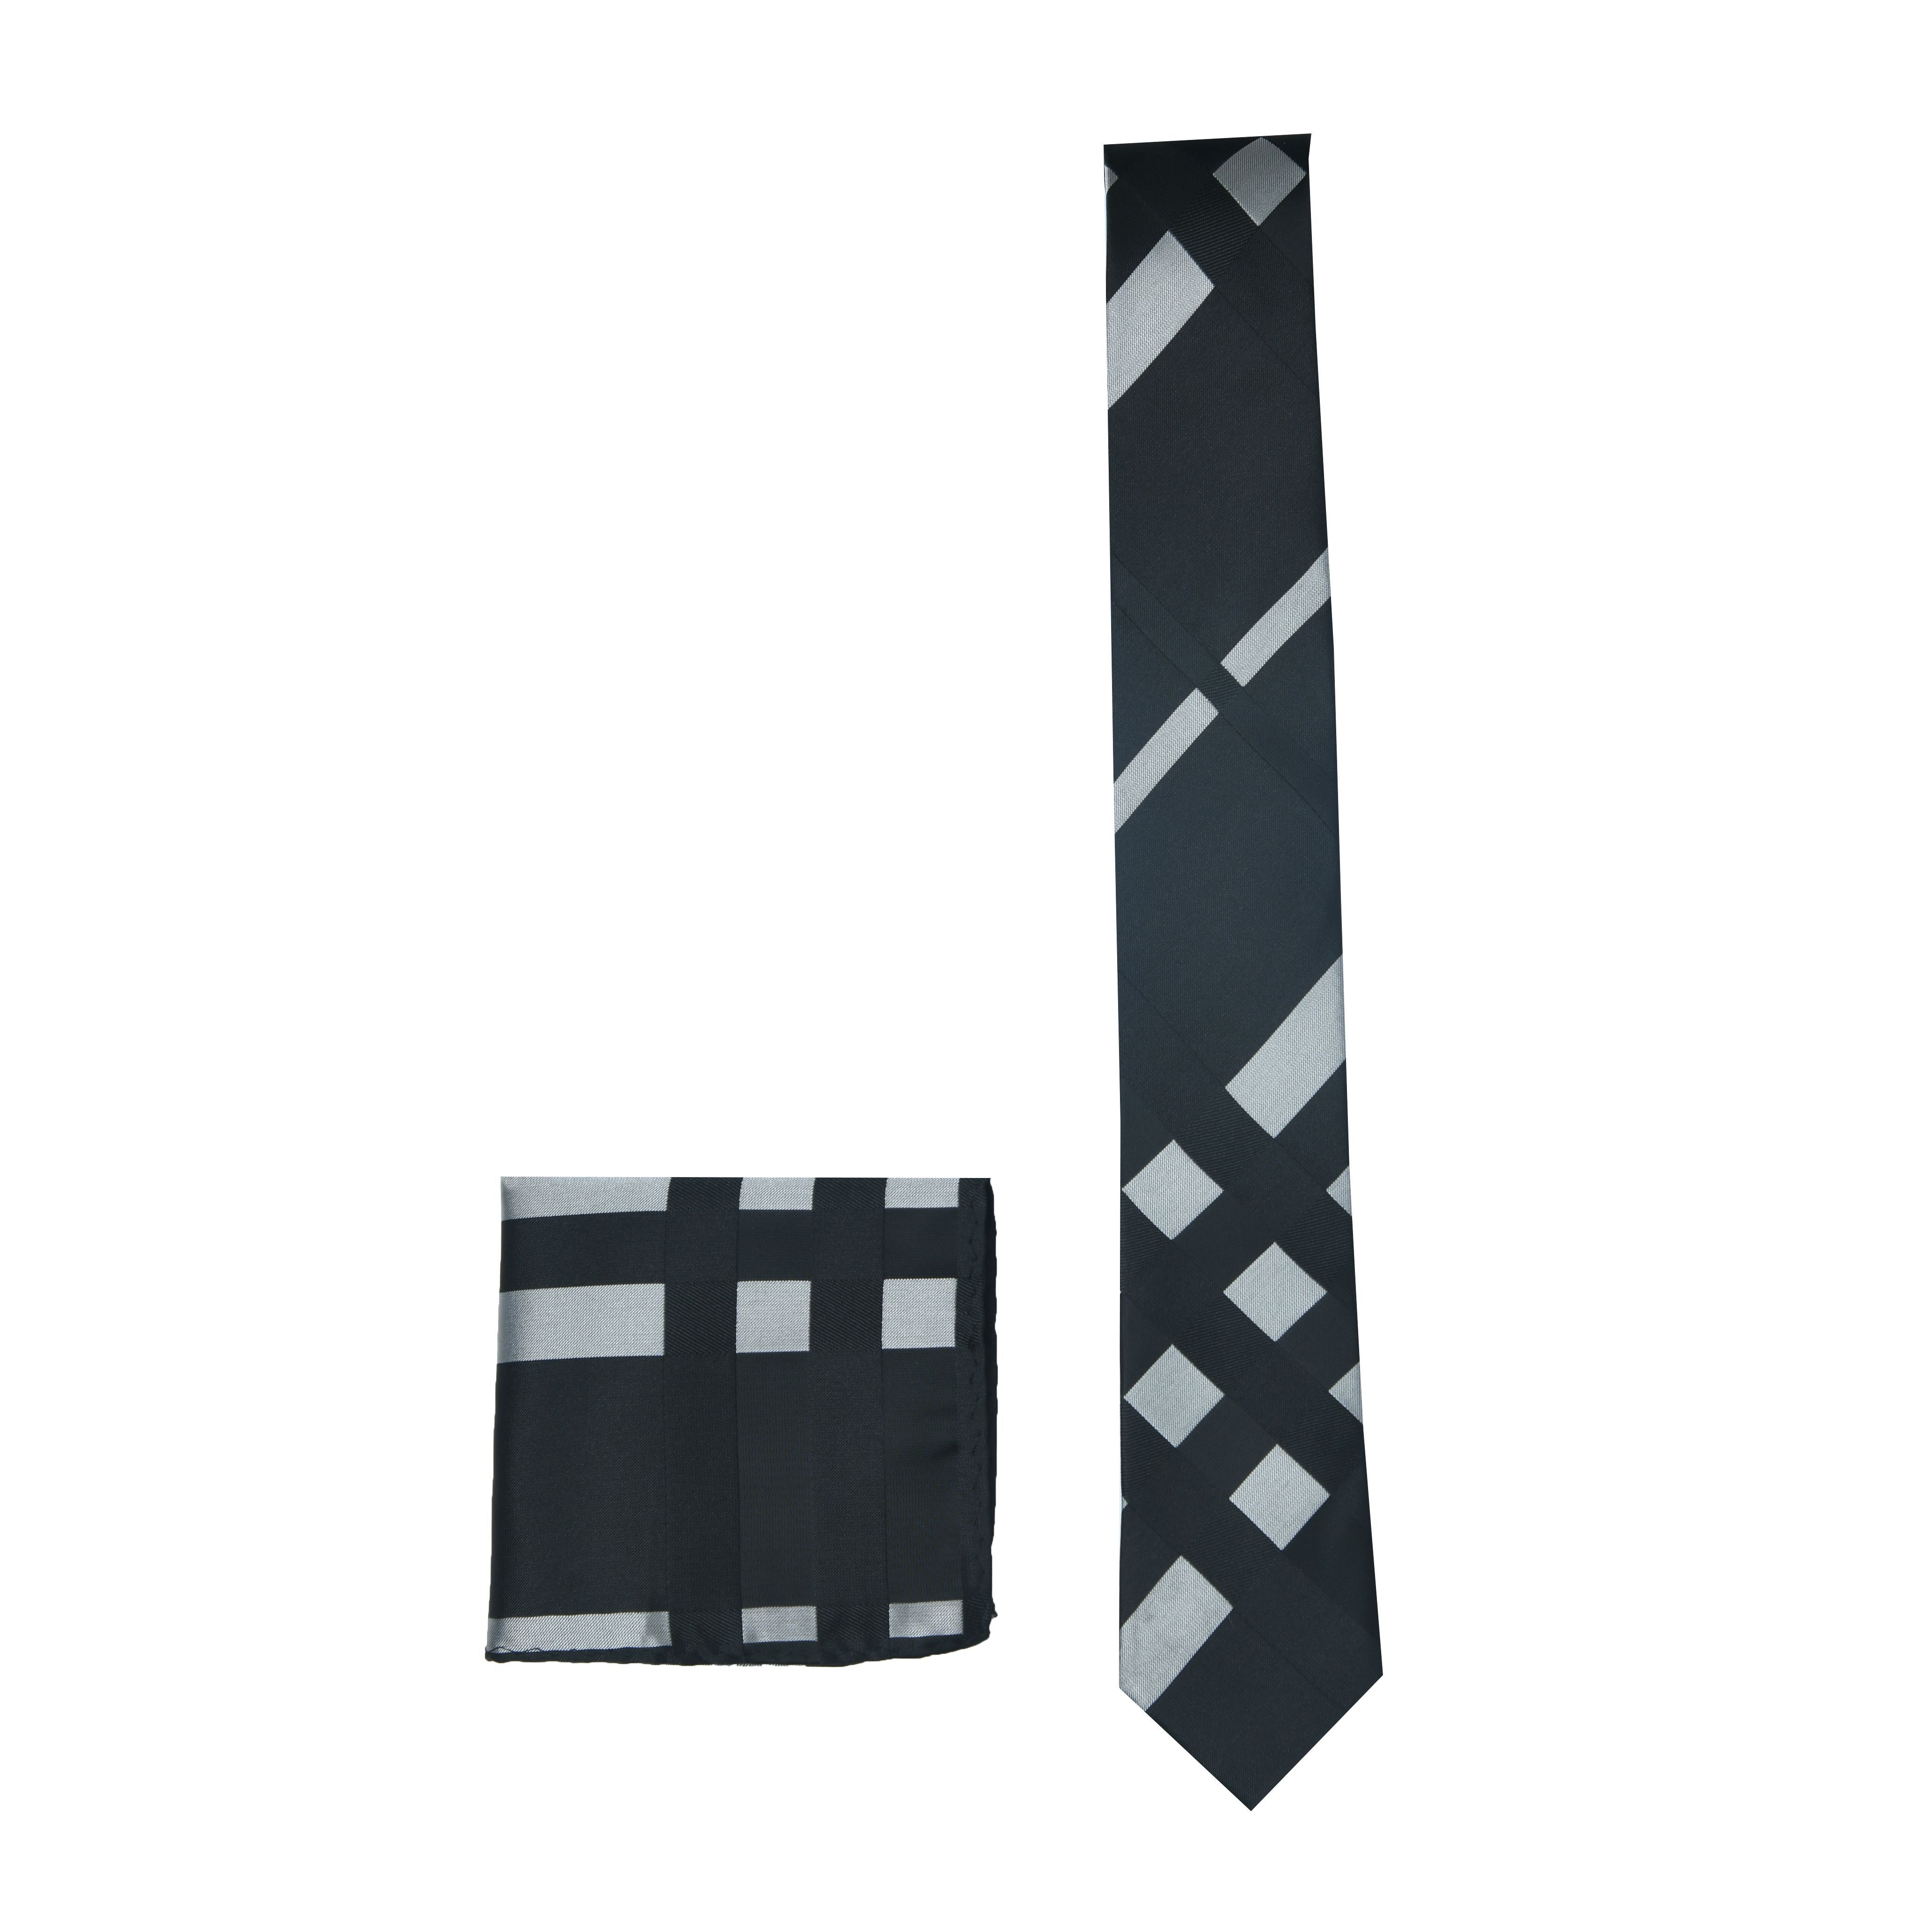 Toffcraft Multi Chequered Neck Tie & Pocket Square - Deep Black